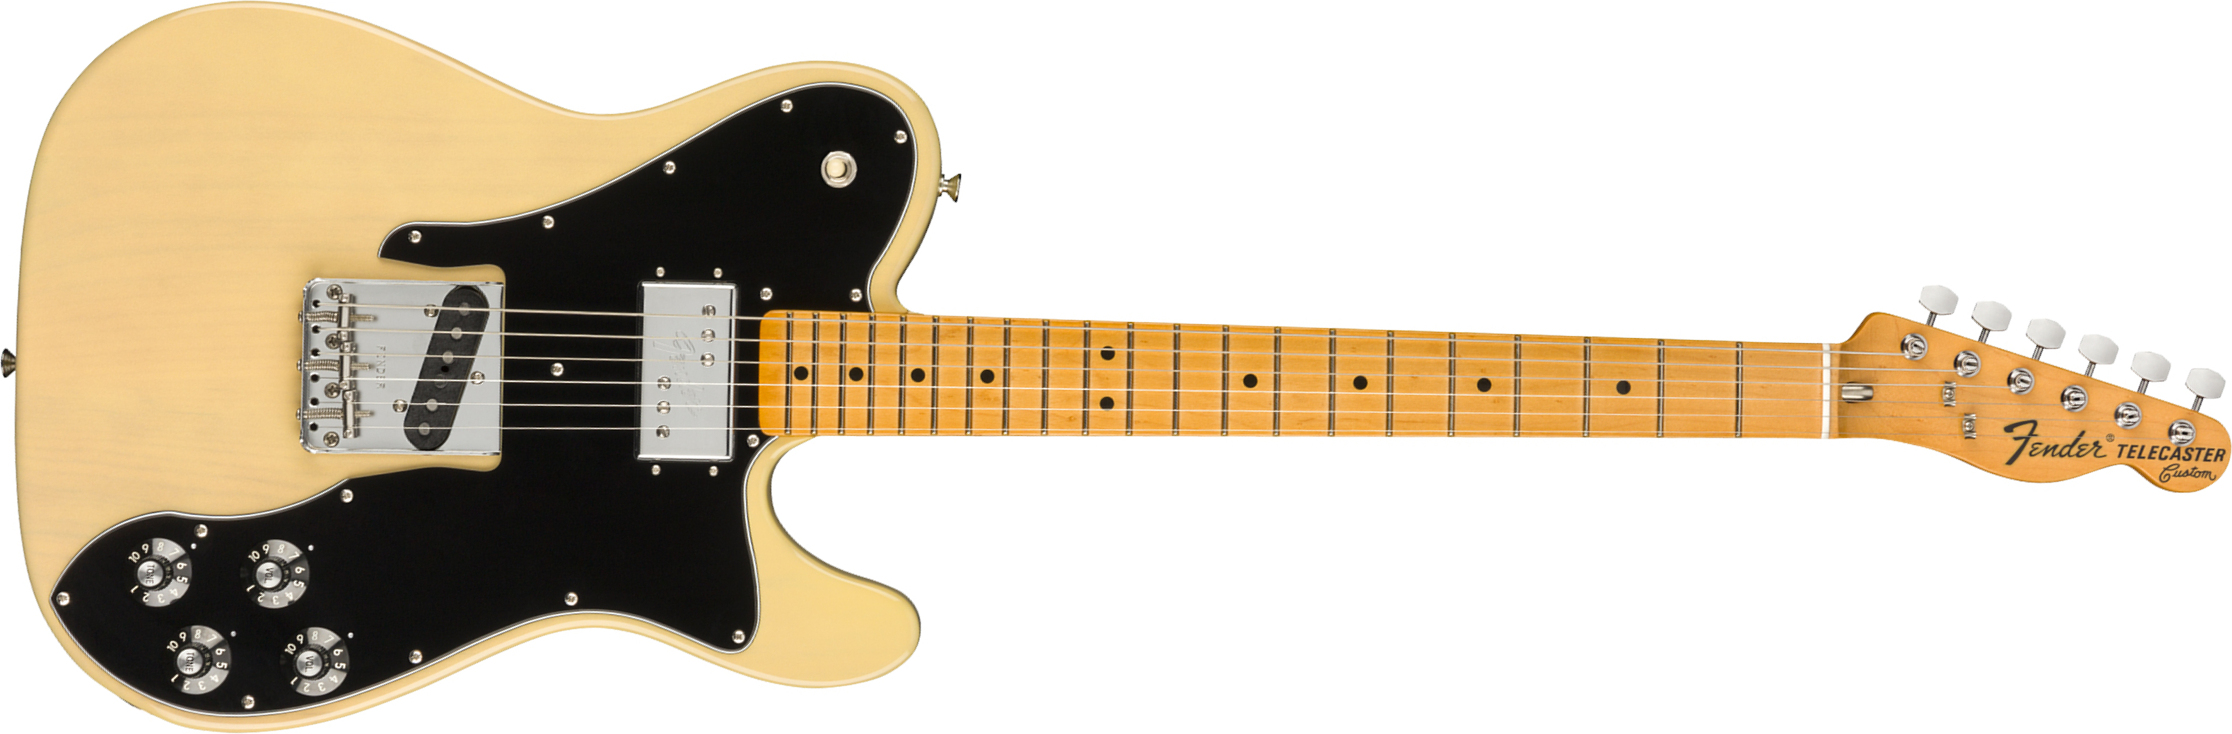 Fender Tele 70s Custom American Original Usa Sh Mn - Vintage Blonde - Tel shape electric guitar - Main picture